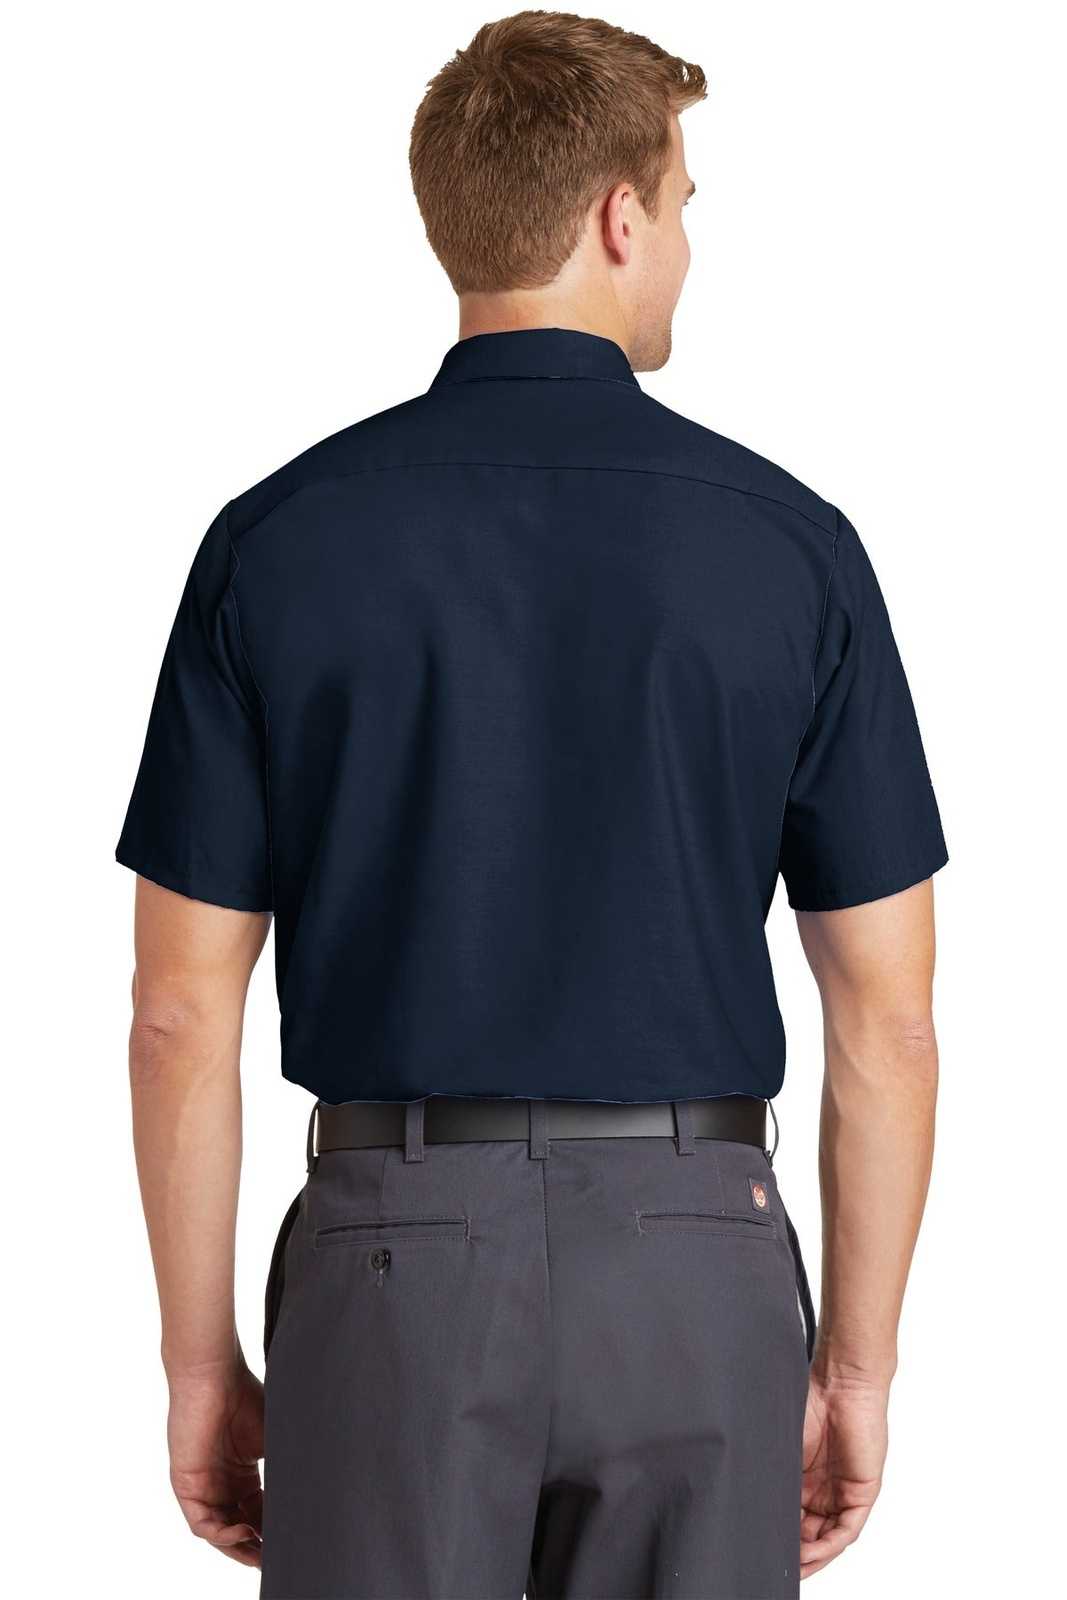 Red Kap SP24 Short Sleeve Industrial Work Shirt - Navy - HIT a Double - 2